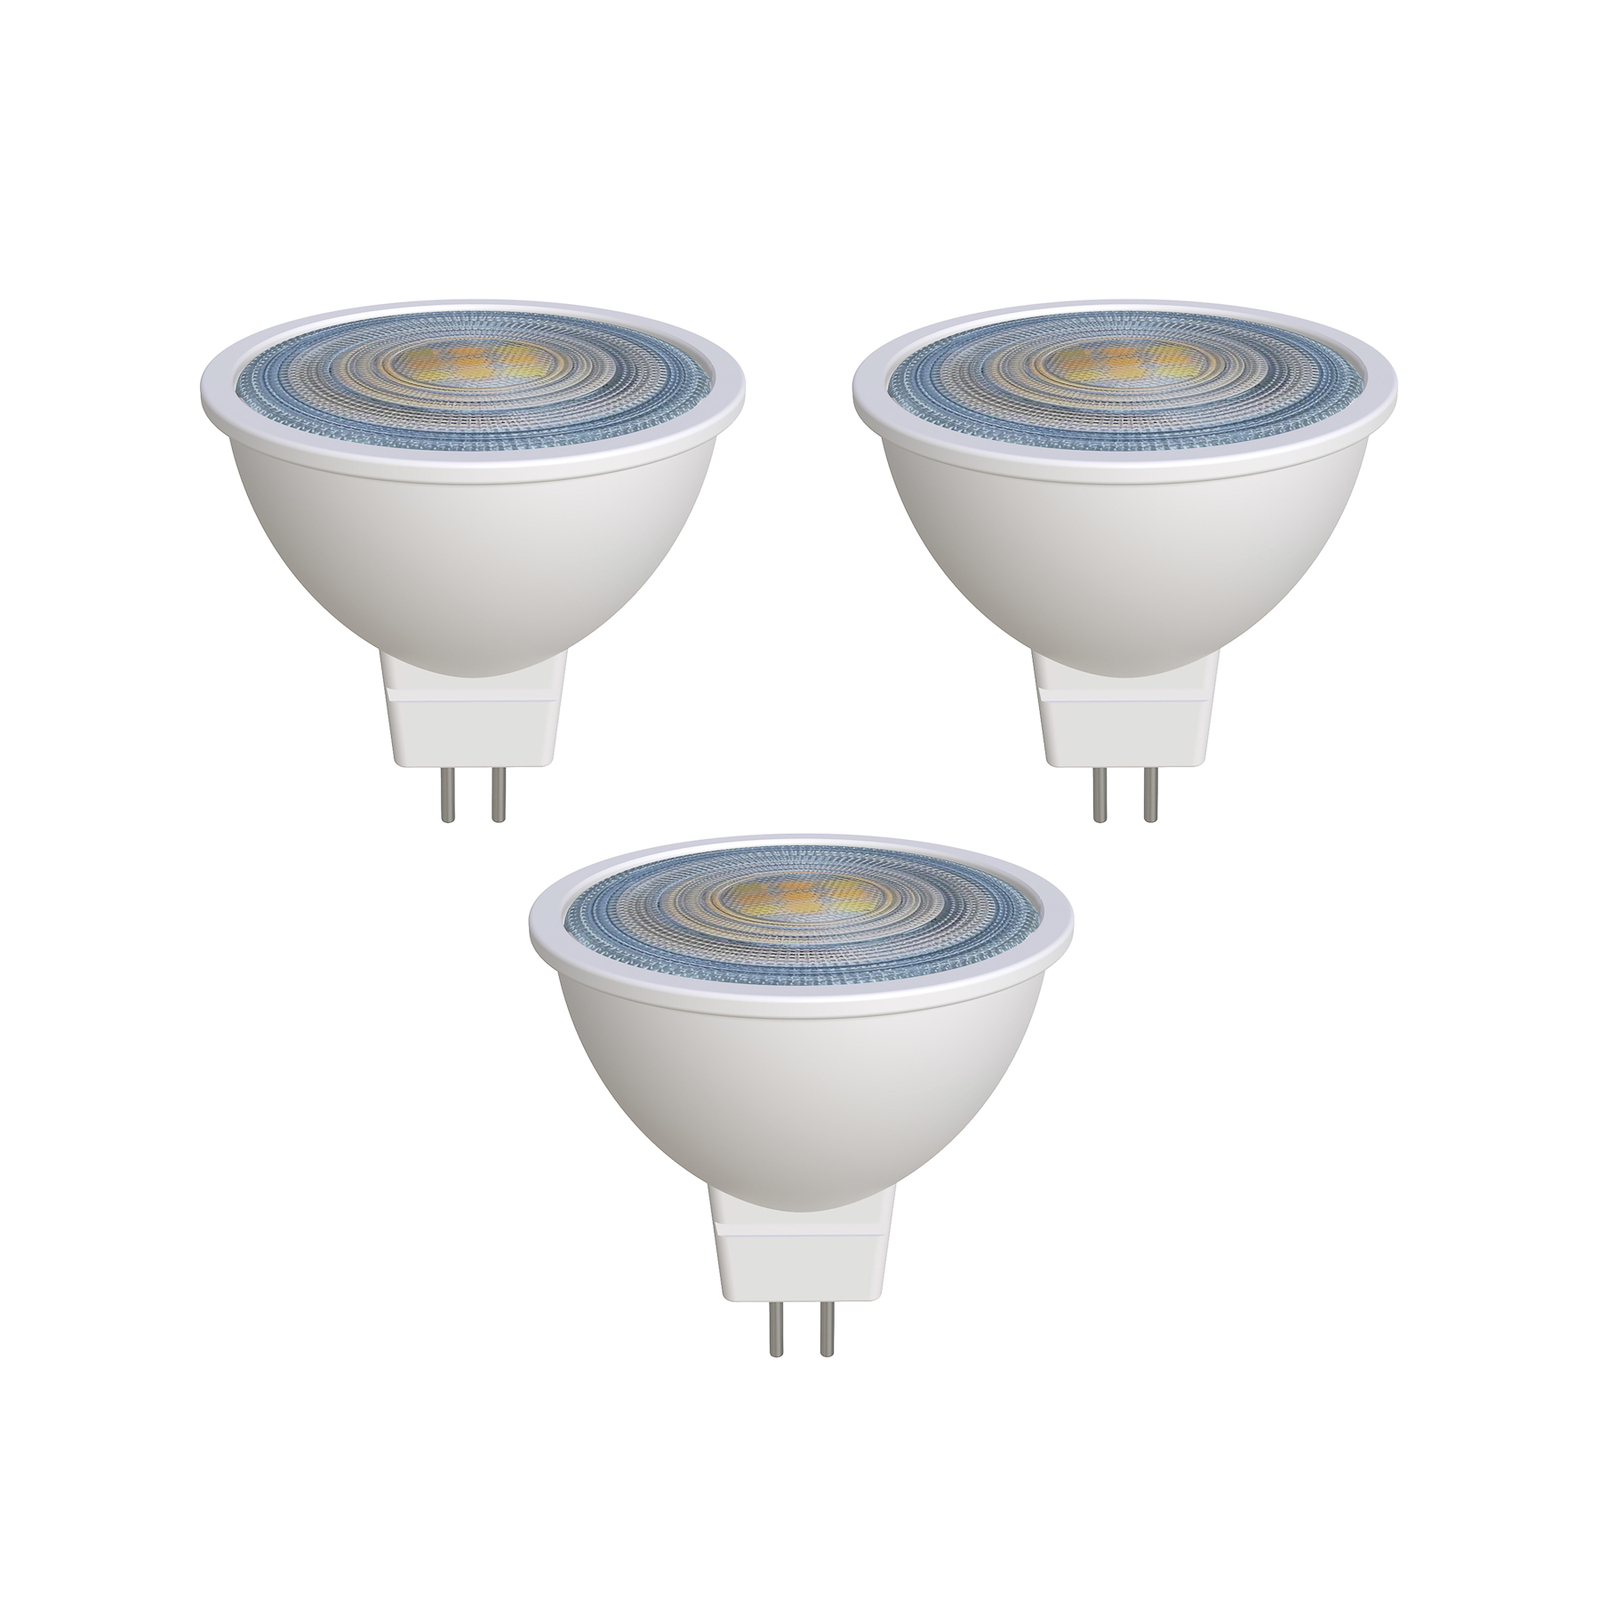 Prios LED refletor GU5.3 7.5W 621lm 36° branco 840 conjunto de 3